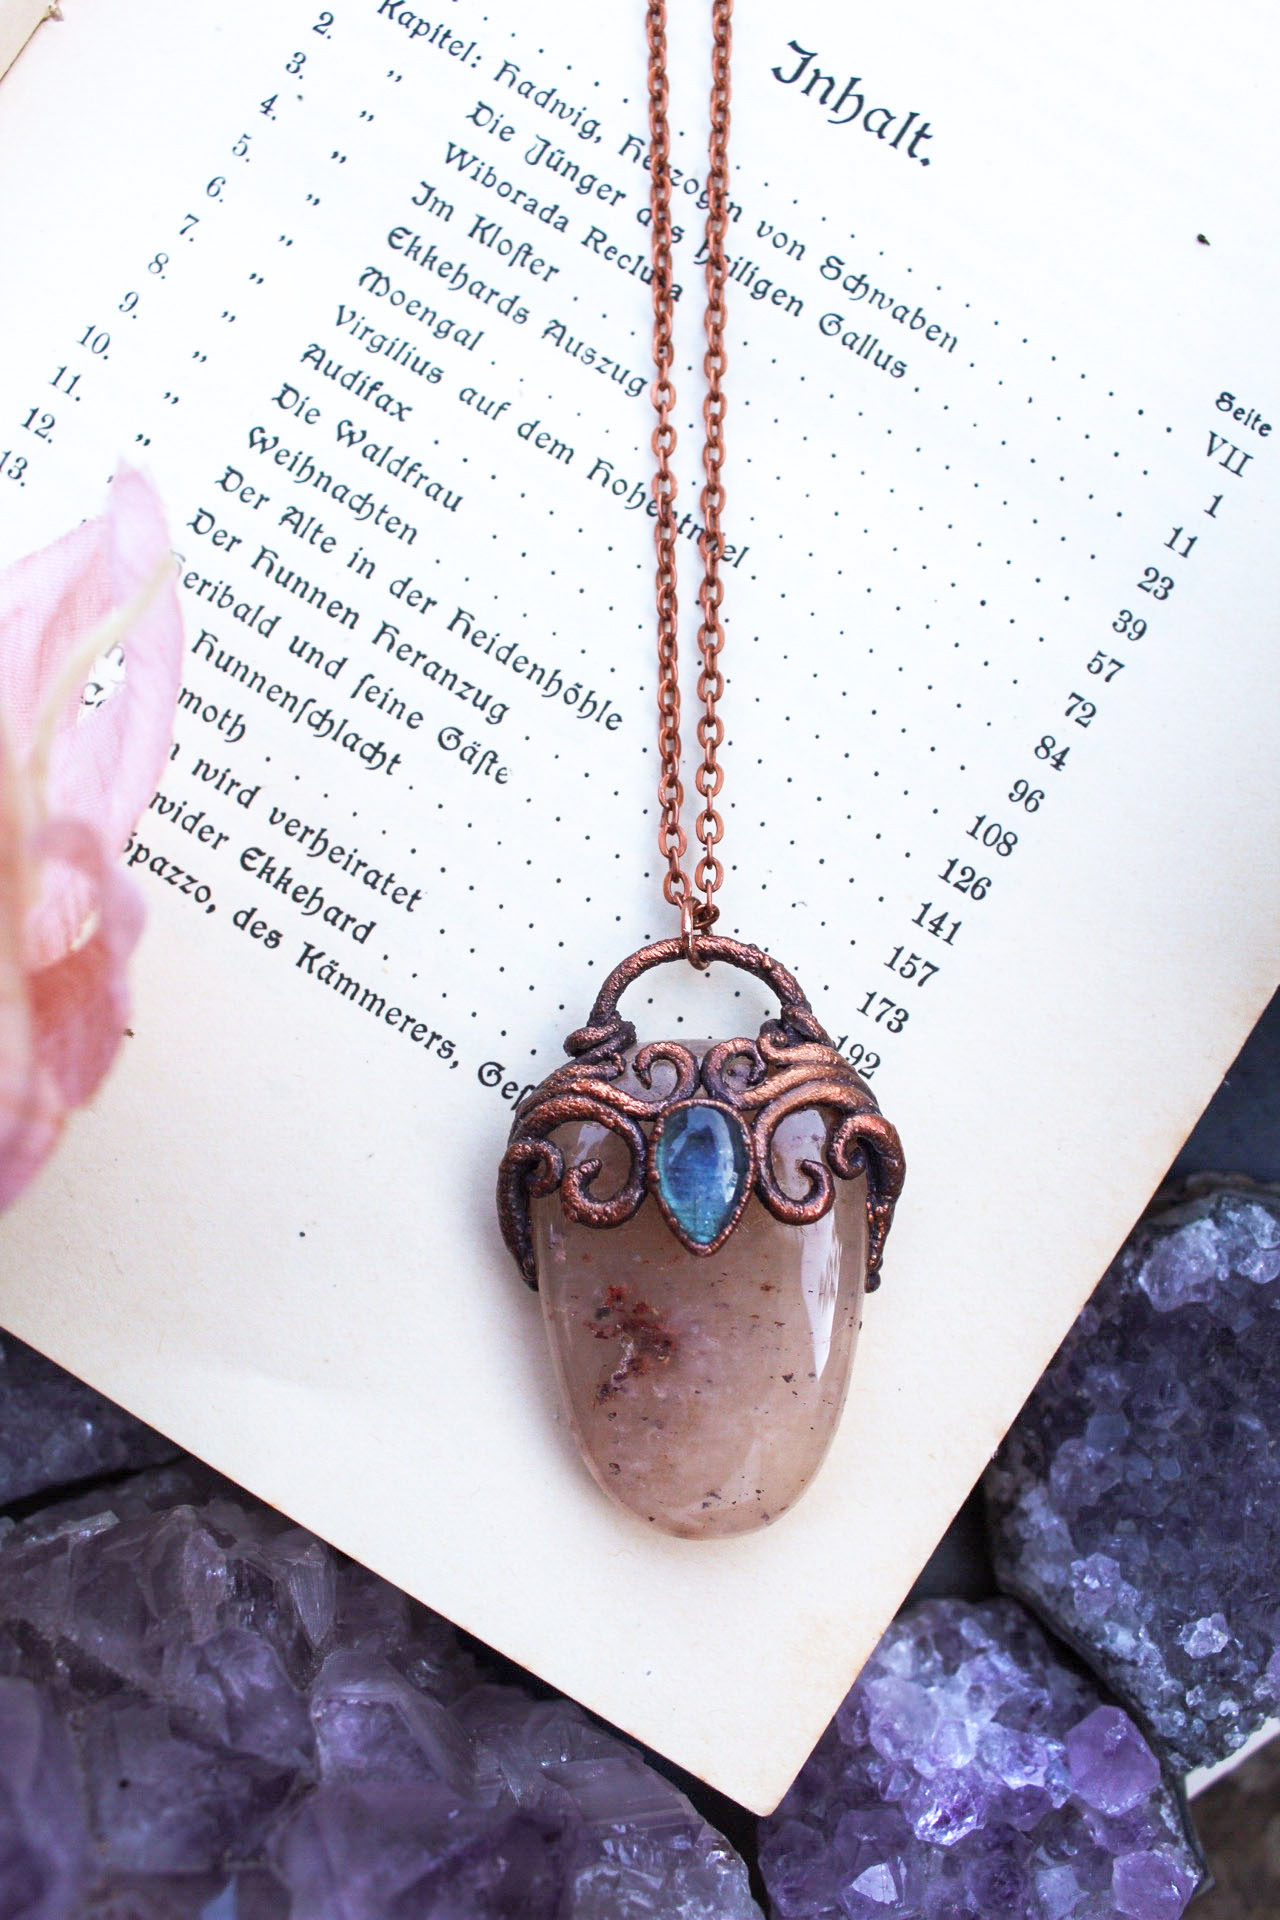 Pretty Mermaid Portal Necklace with Crystals Featuring Aged Copper, Quartz + a Blue Labradorite Tear